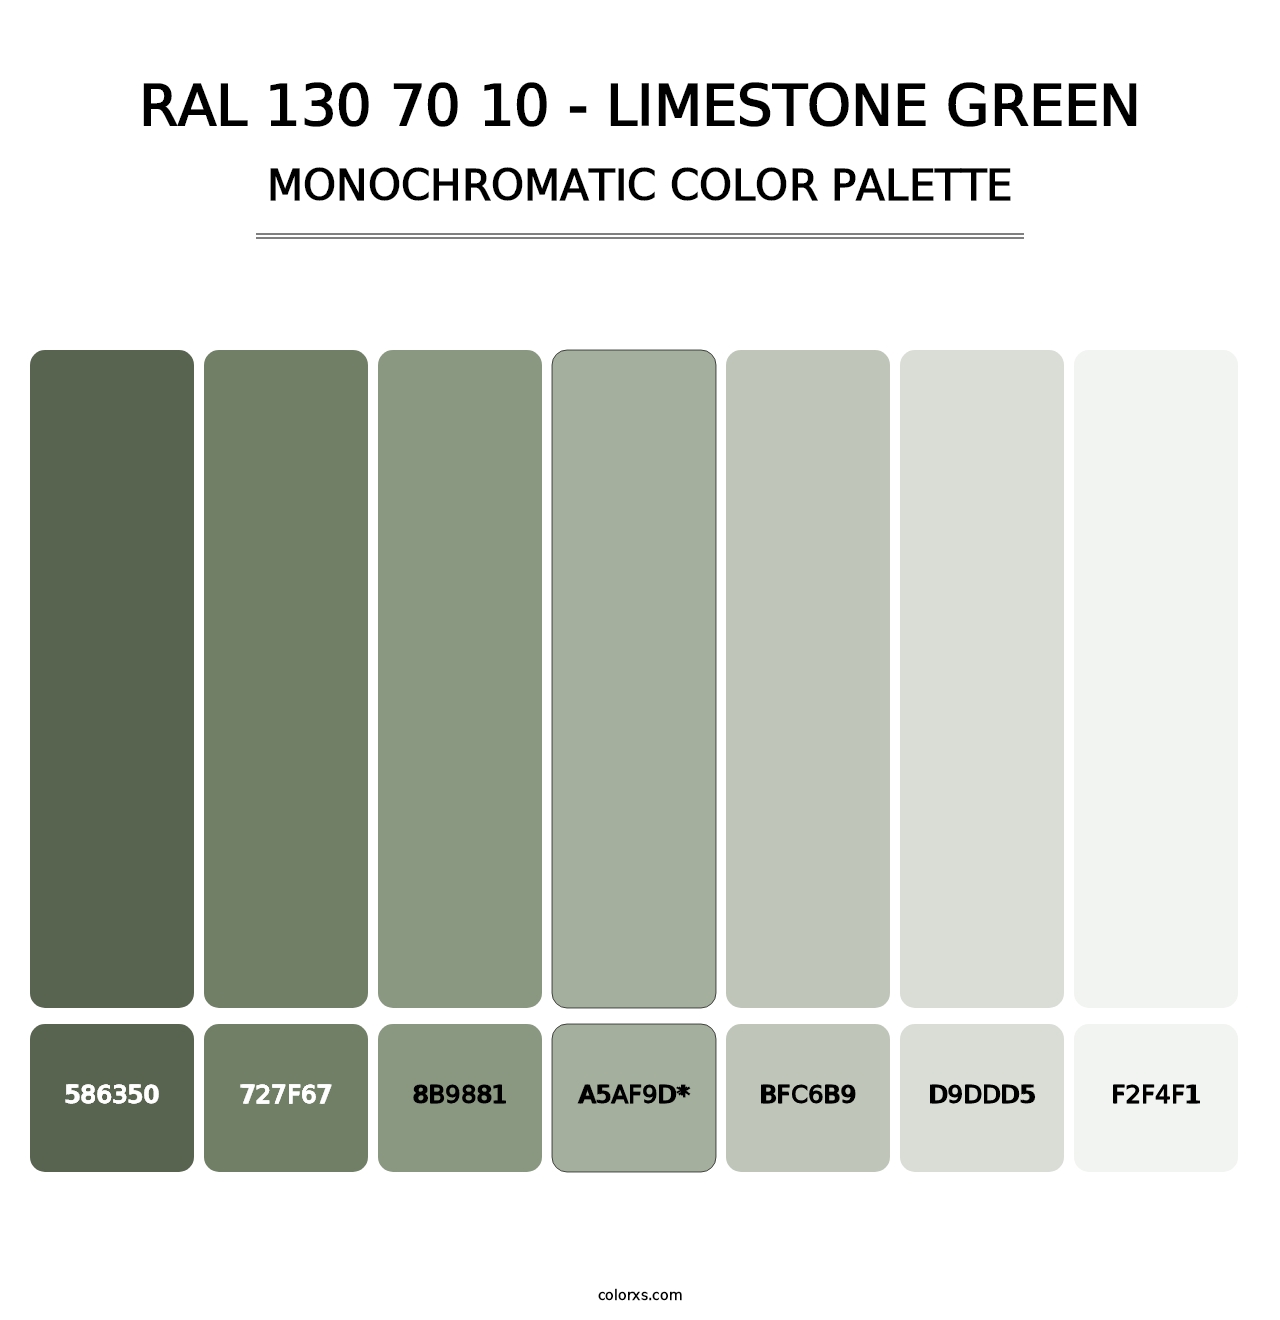 RAL 130 70 10 - Limestone Green - Monochromatic Color Palette